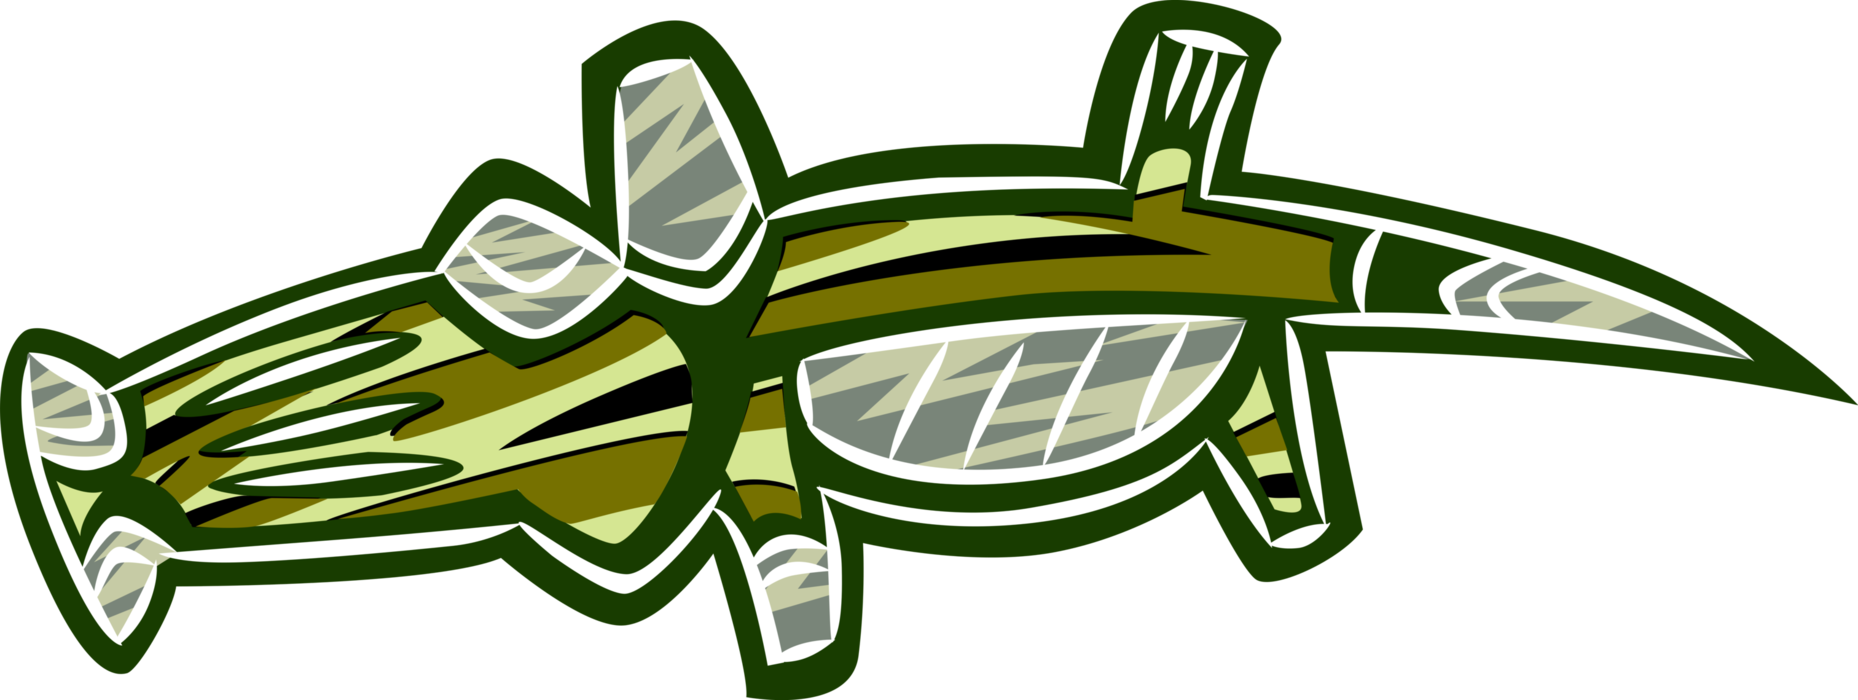 Vector Illustration of Crocodile Reptile Animal Symbol